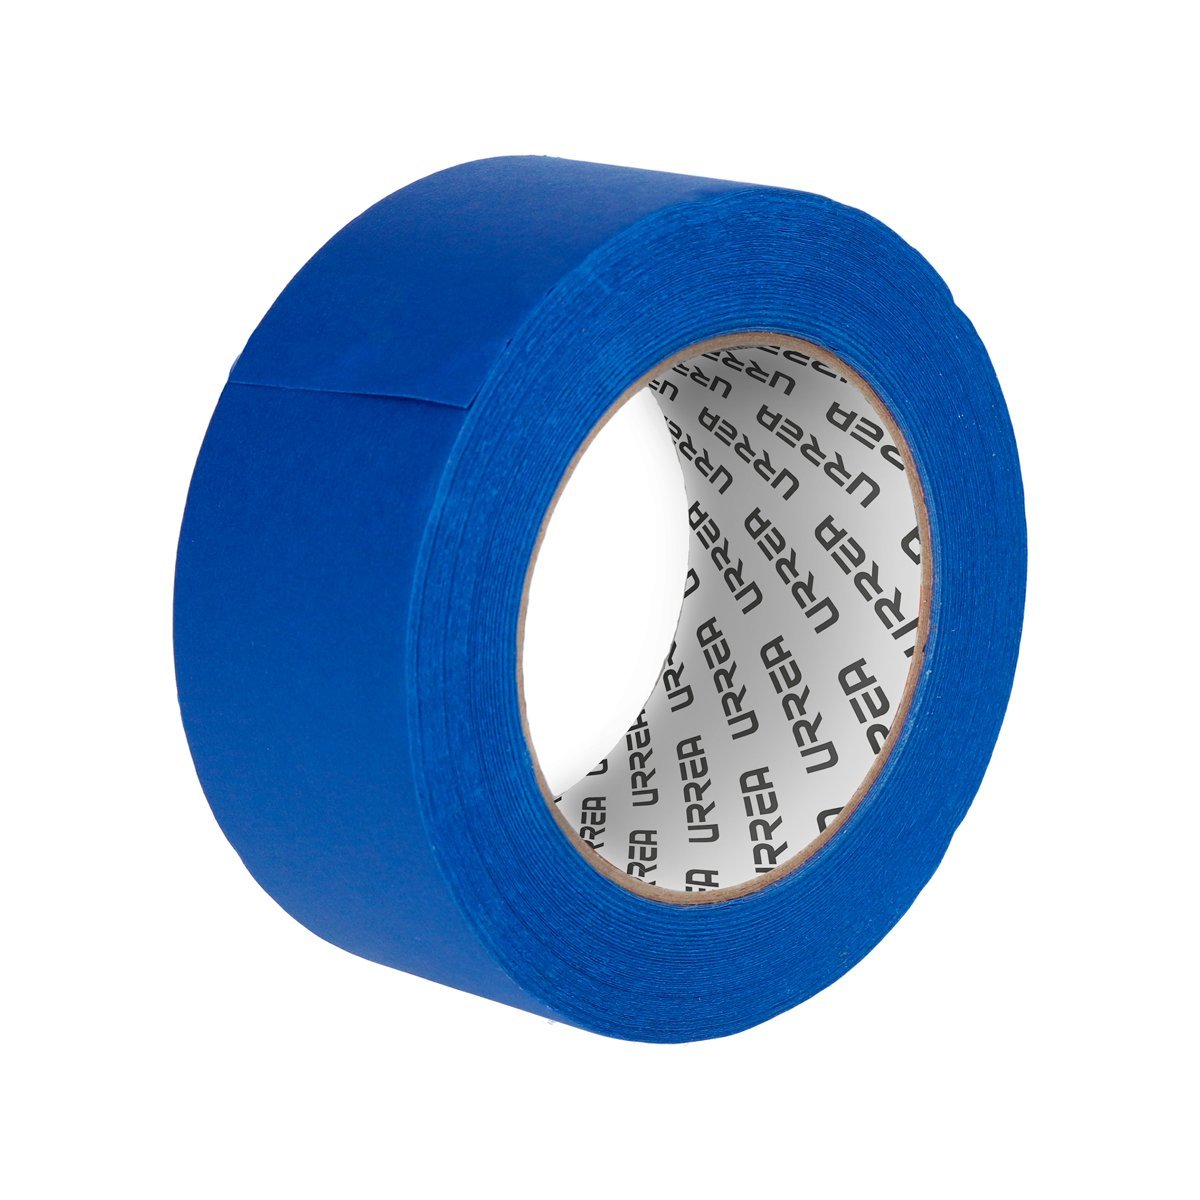 Cinta masking tape industrial 36mm, URREA - FERRETERÍA WITZI